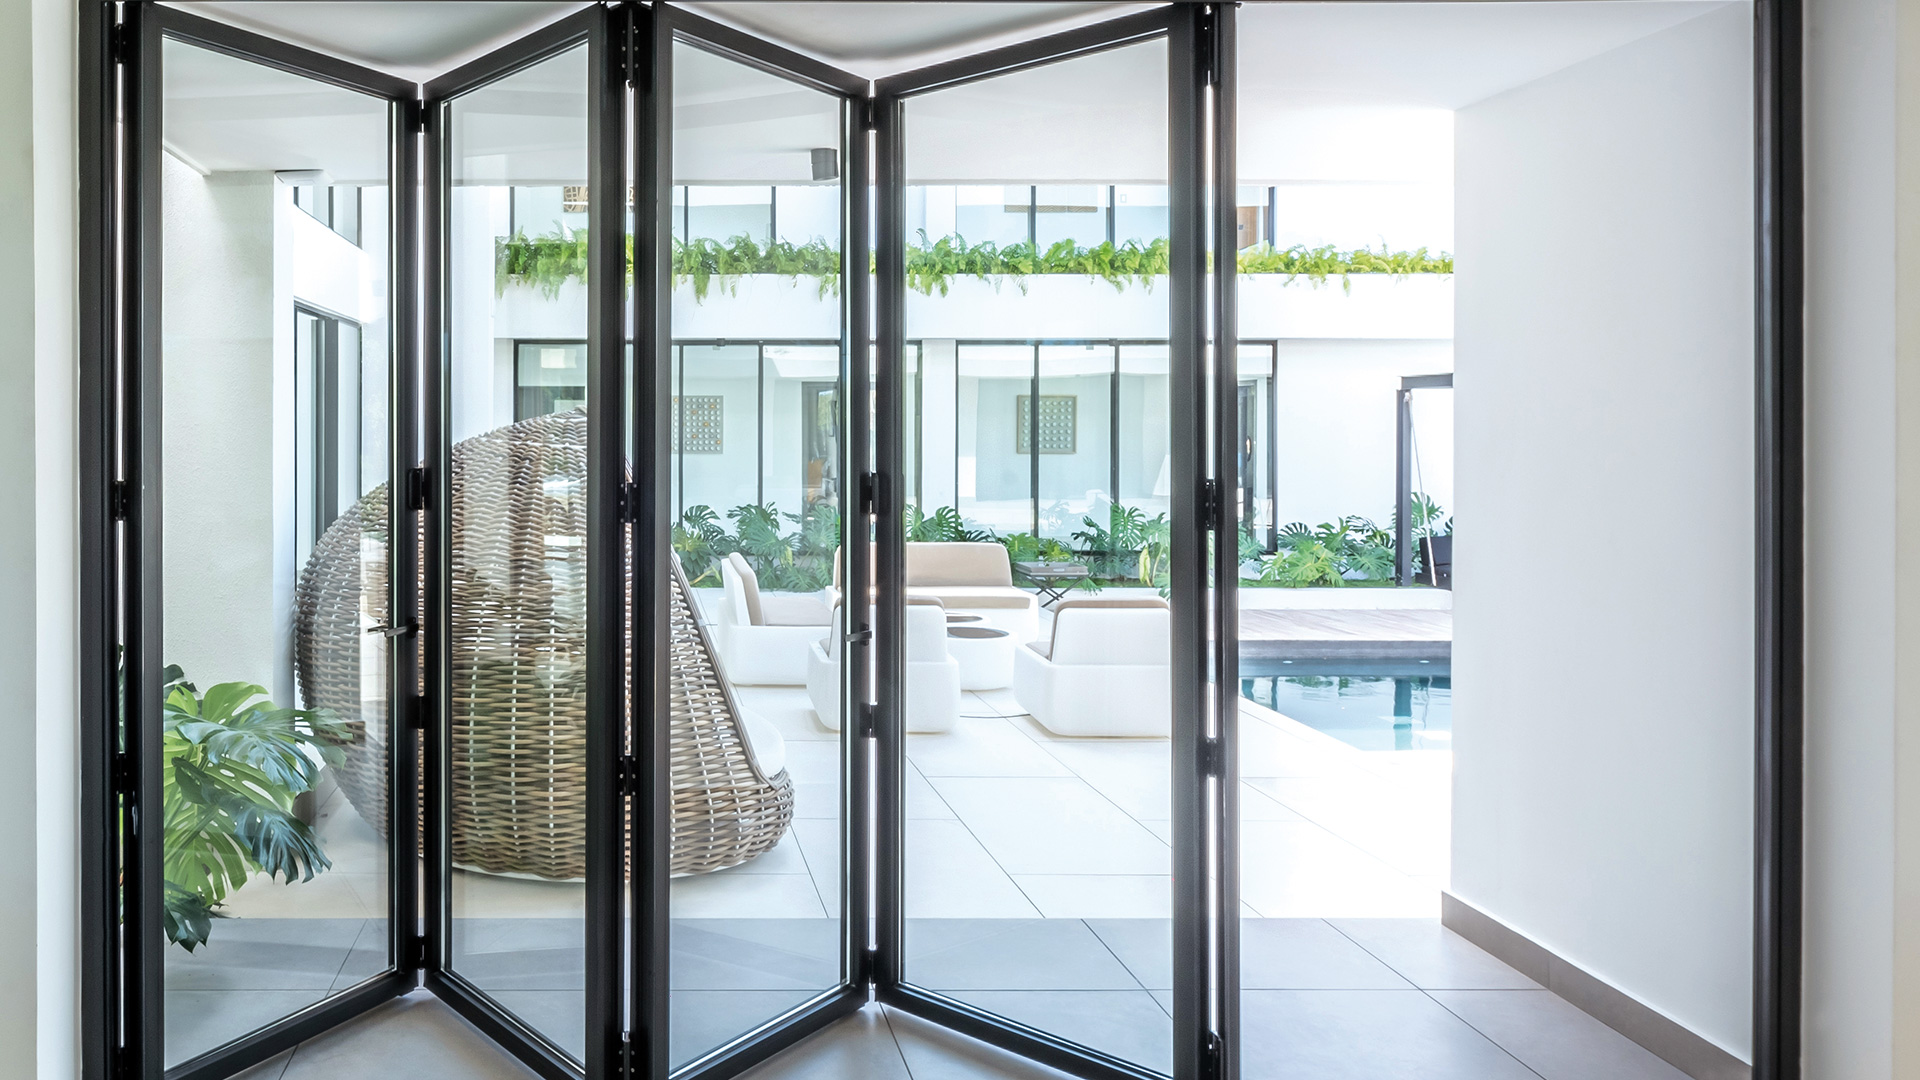 Essex Window and Door Centre can help you design your own bespoke  bi-folding or sliding doors